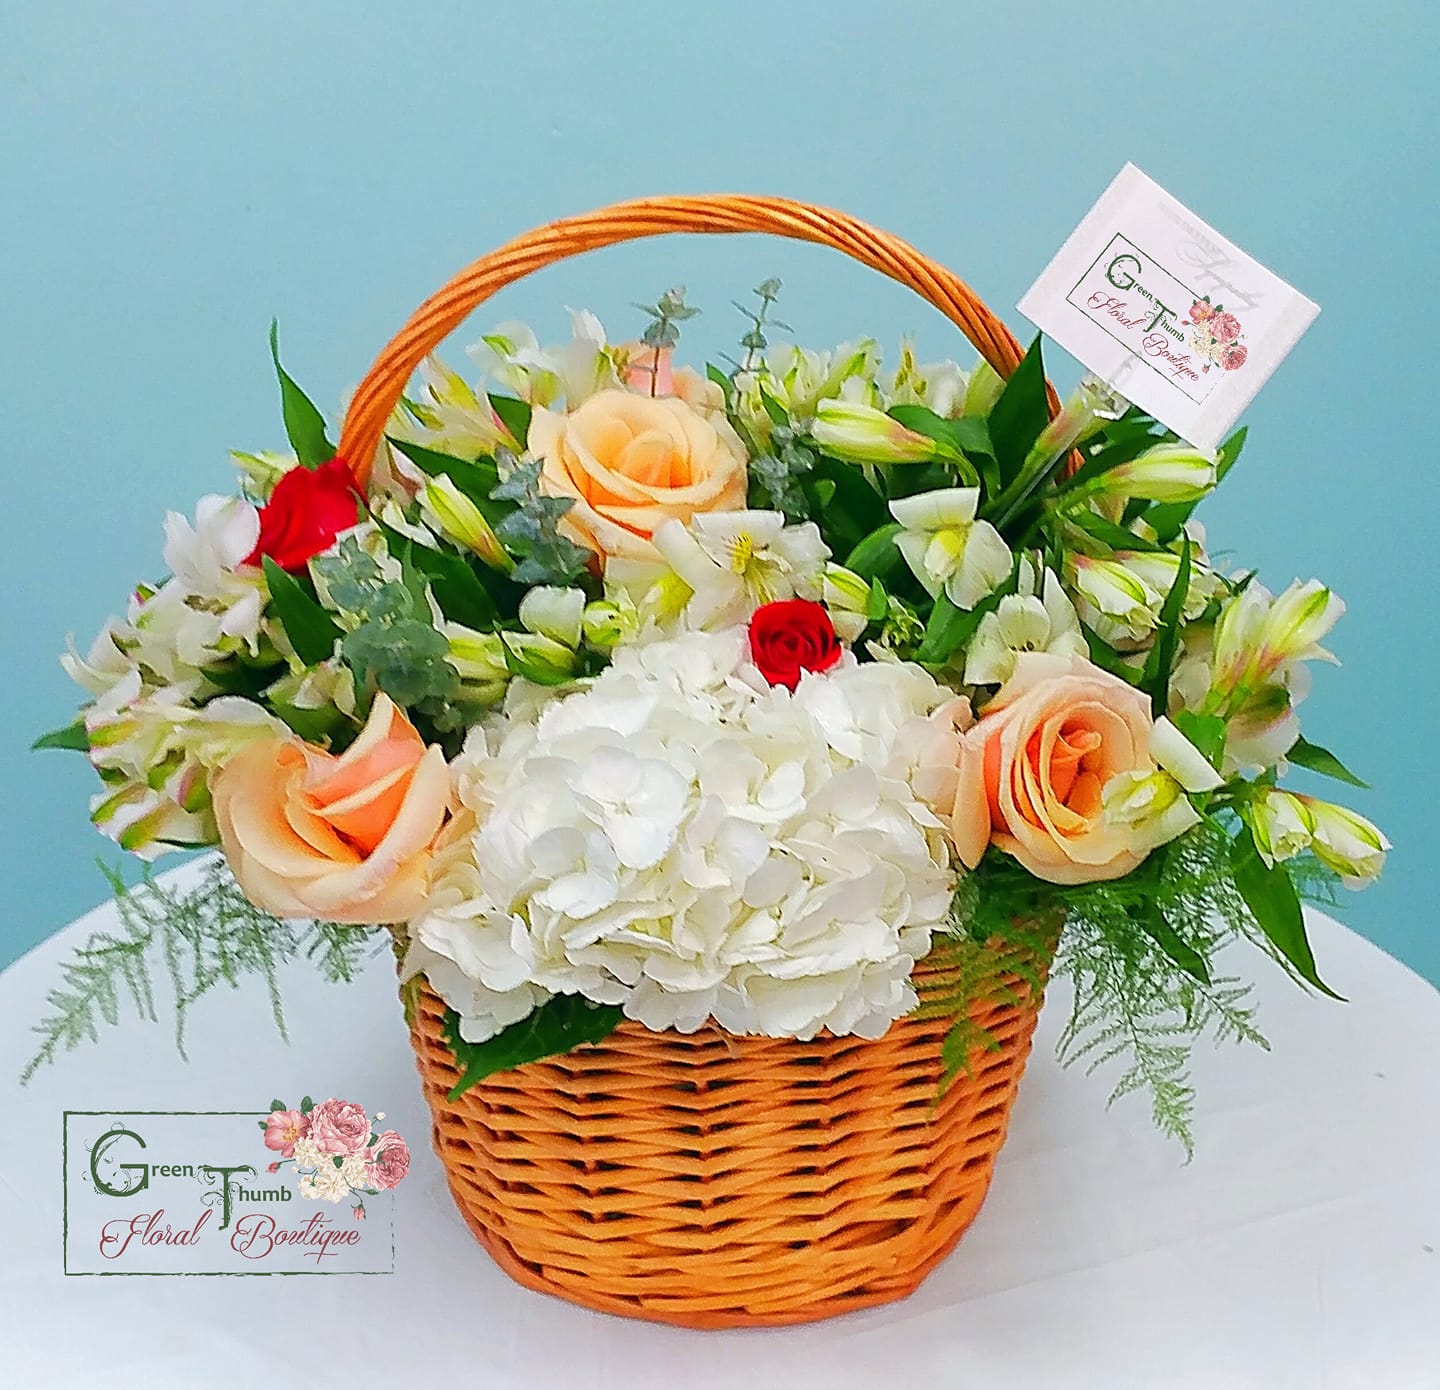 Garden Style Sympathy Floral Basket Arrangement